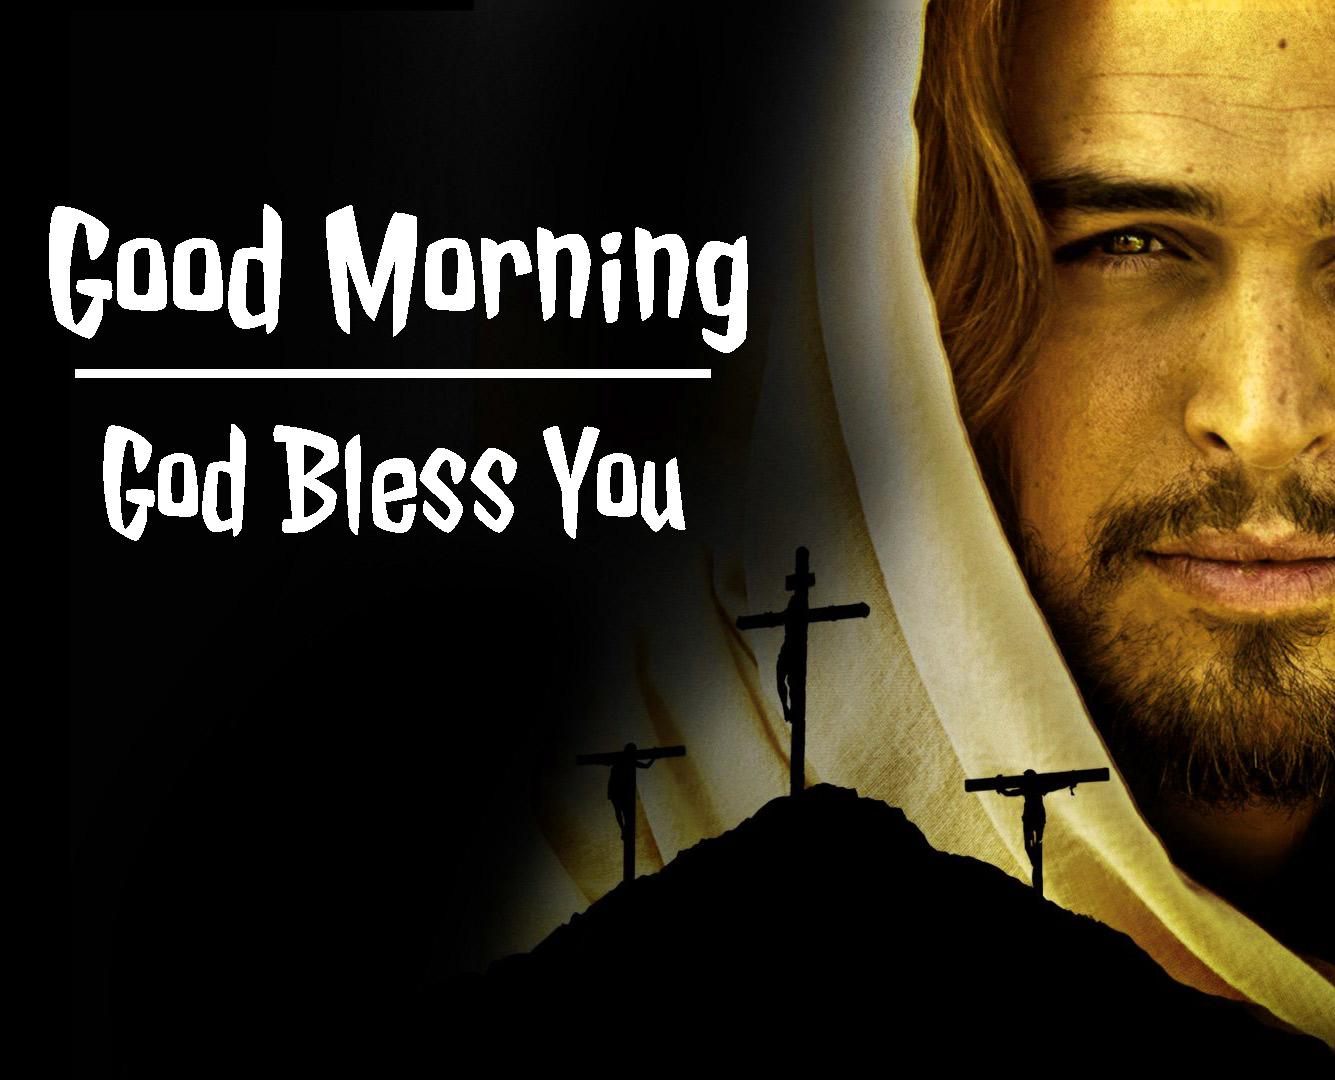 god bless good morning images Wallpaper Download 